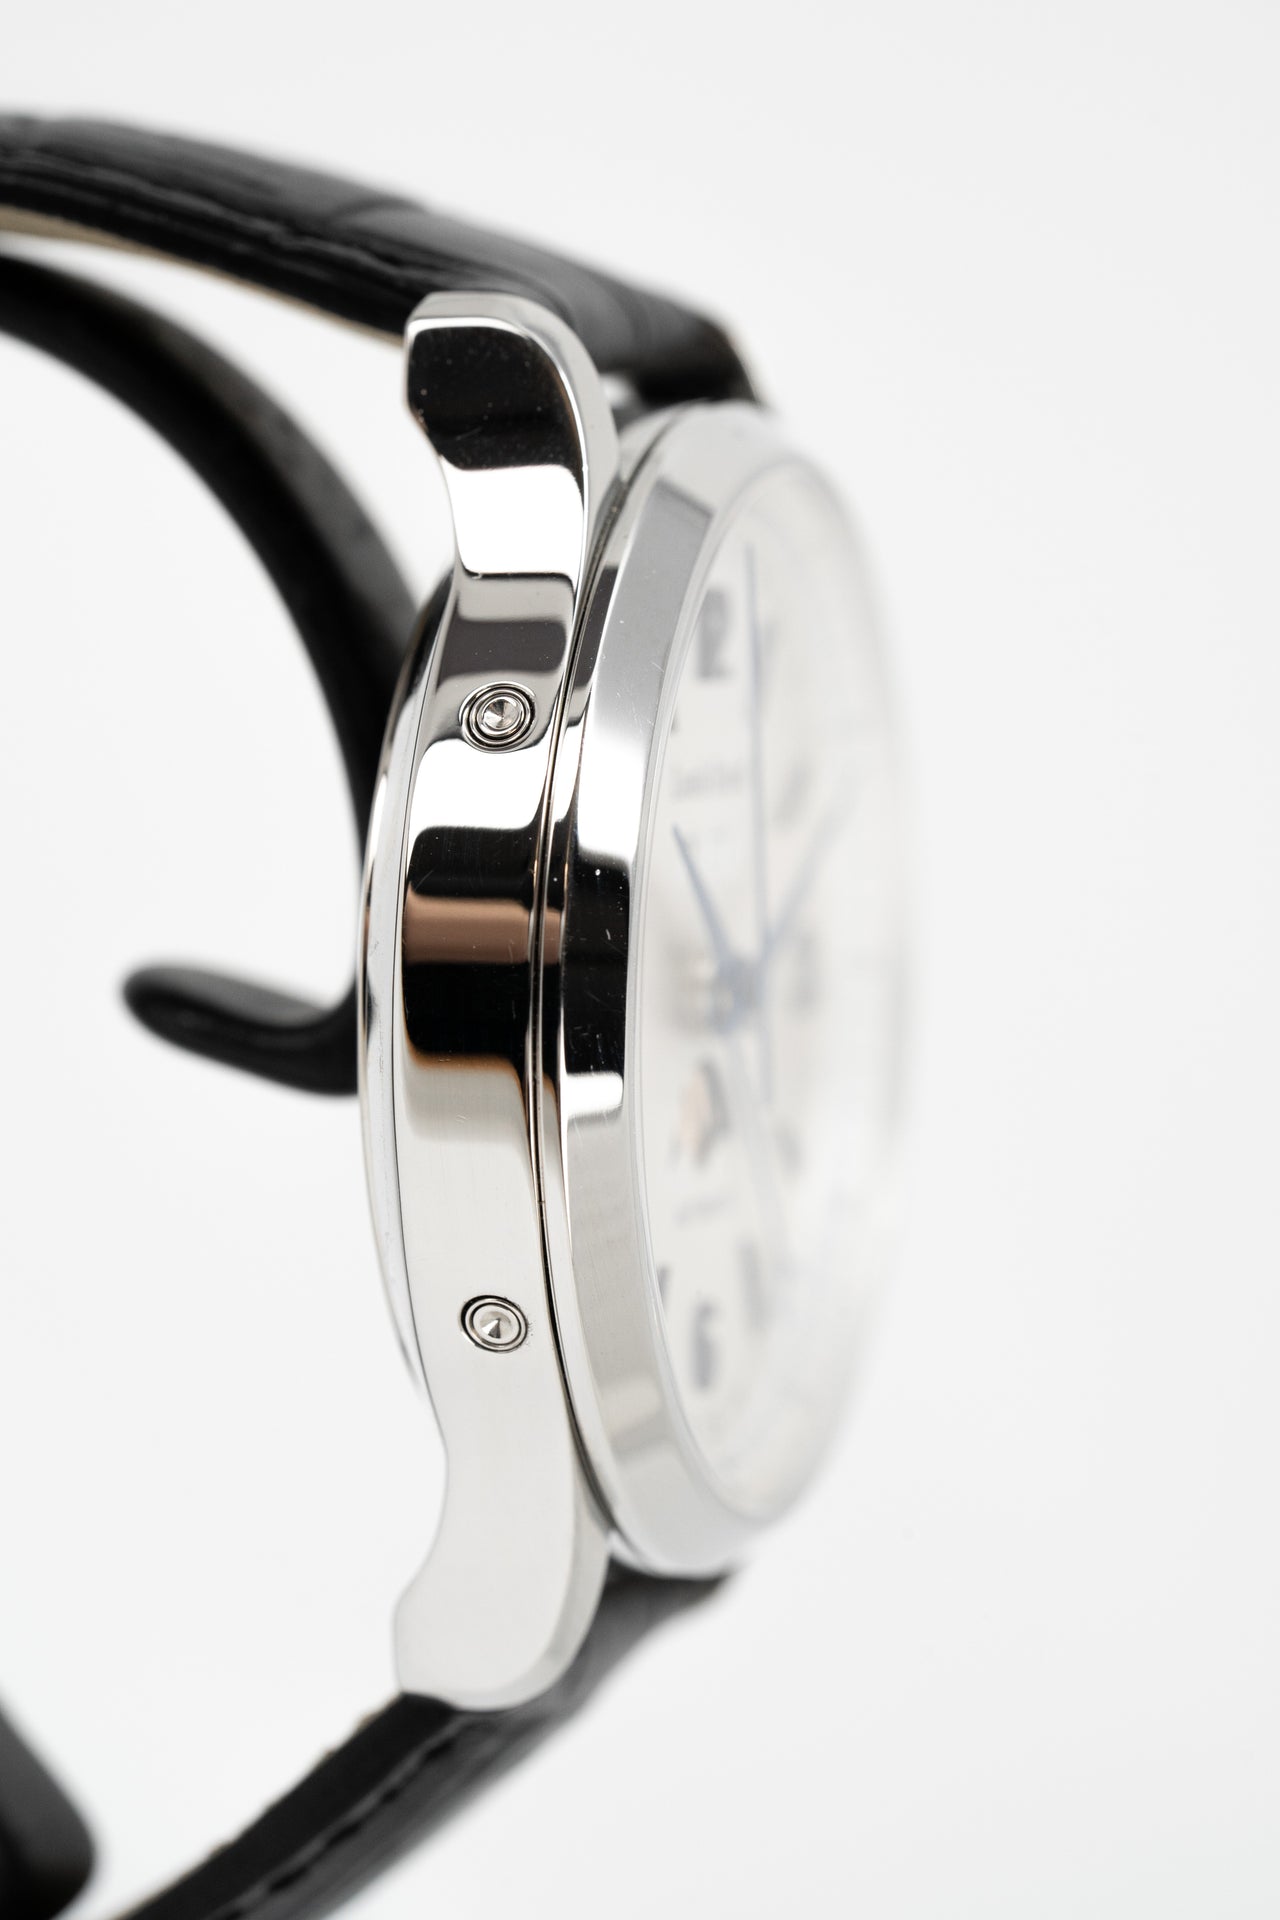 Louis Erard 1931 Dual Time Automatic Men's Watch 82 224 AA01 +